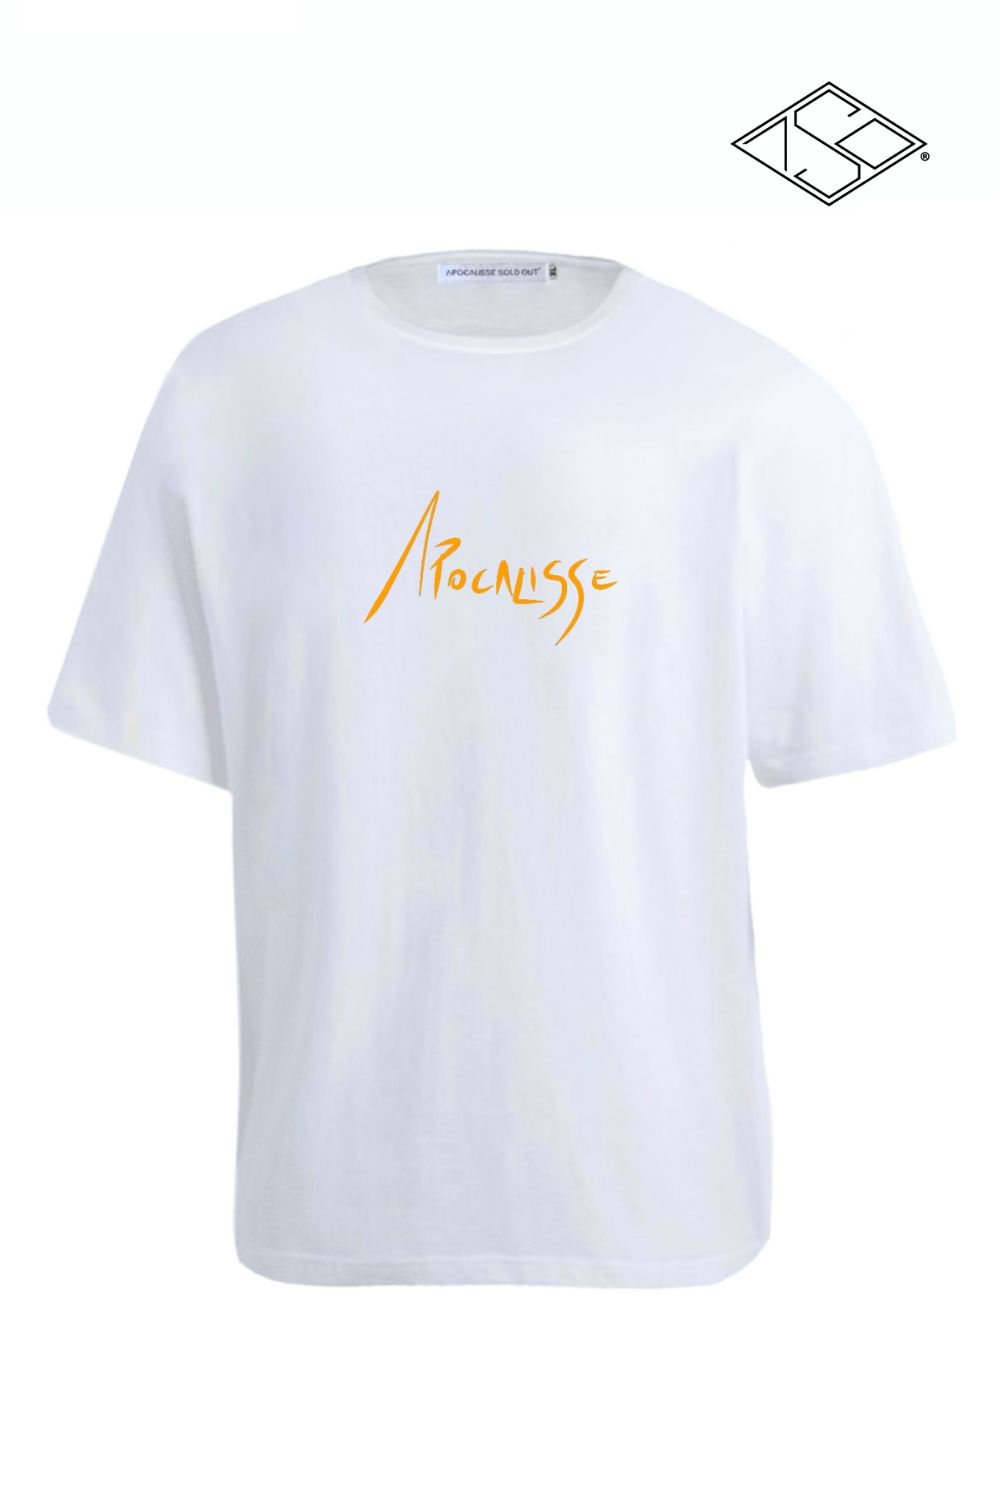 Apocalisse Basic edition orange print white tshirt by ApocalisseSoldOut® Fashion Brand